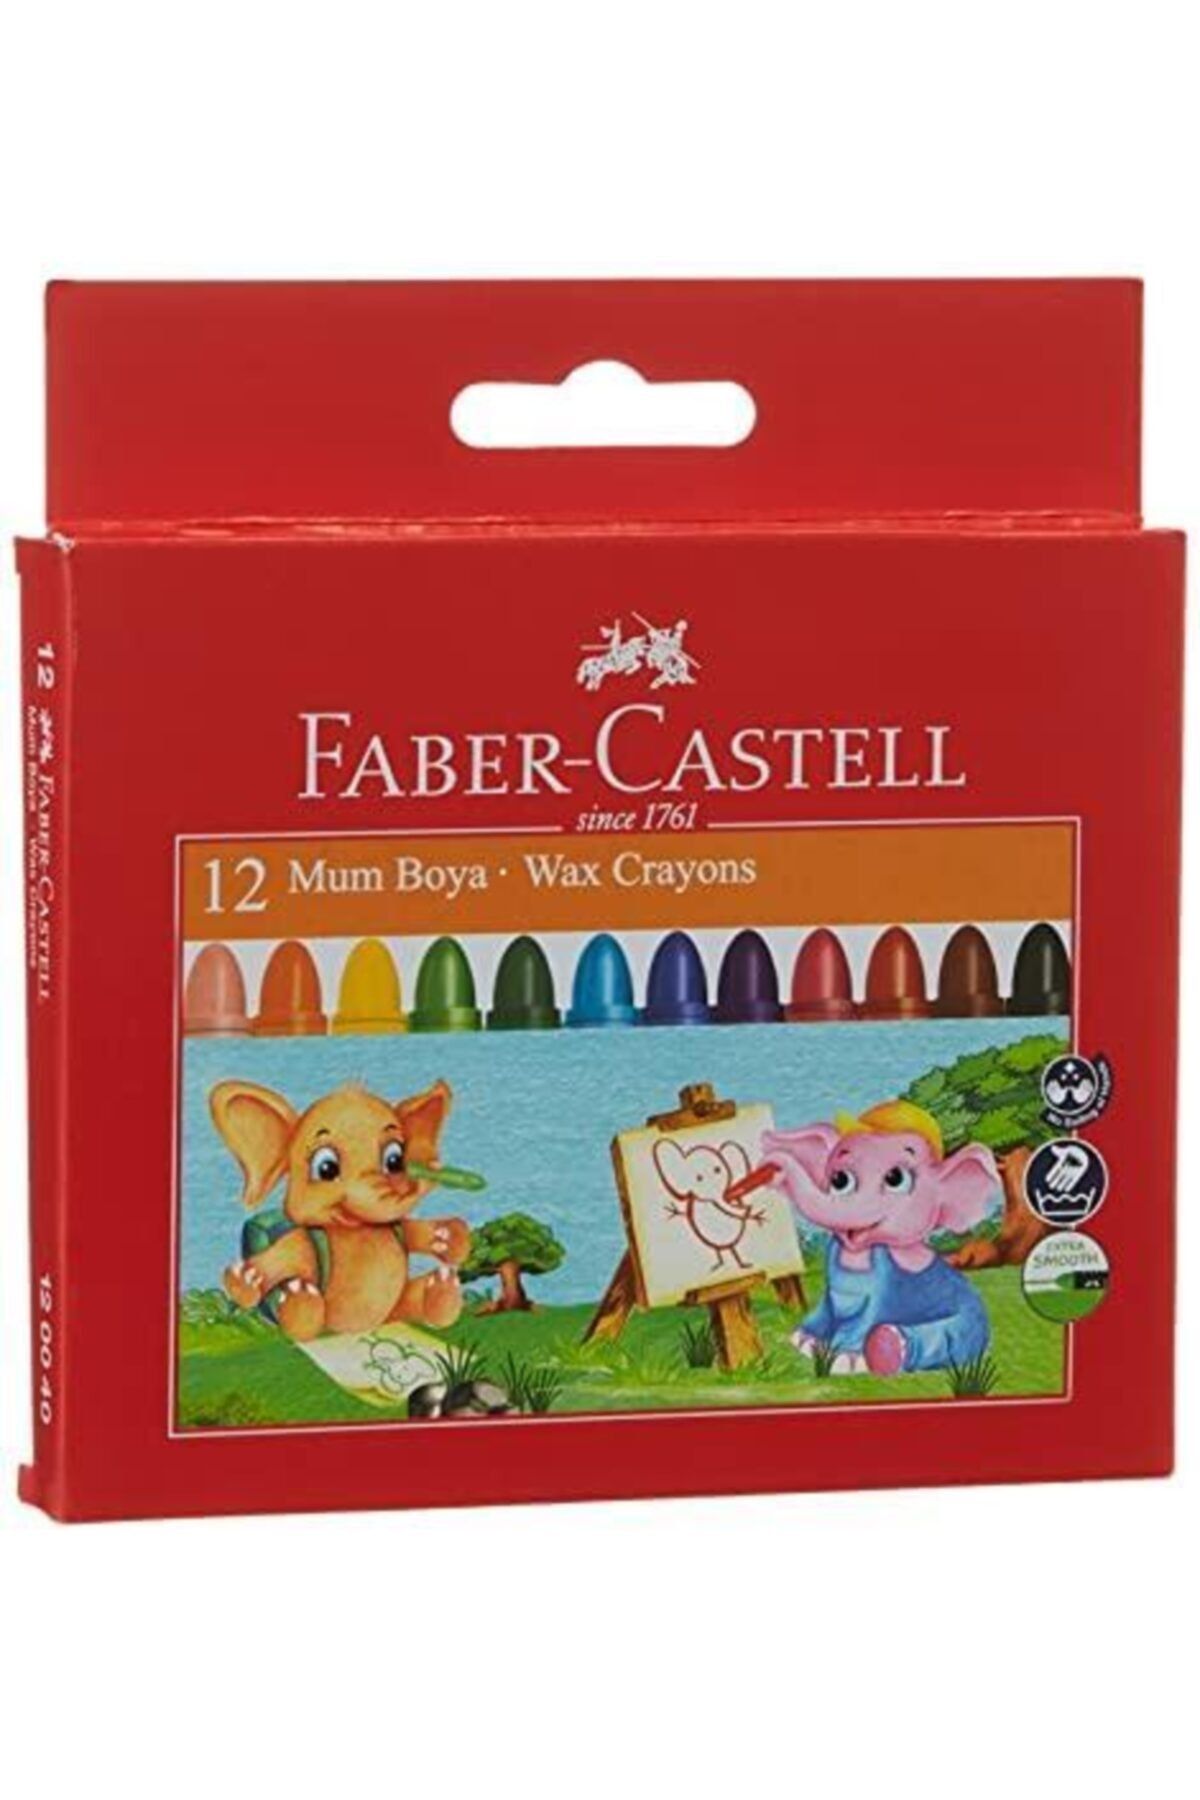 Faber Castell Marka: Faber-castell 5281120040000 Süper Yıkanabilir Mum Boya 12r Kategori: Masaüstü Organizer